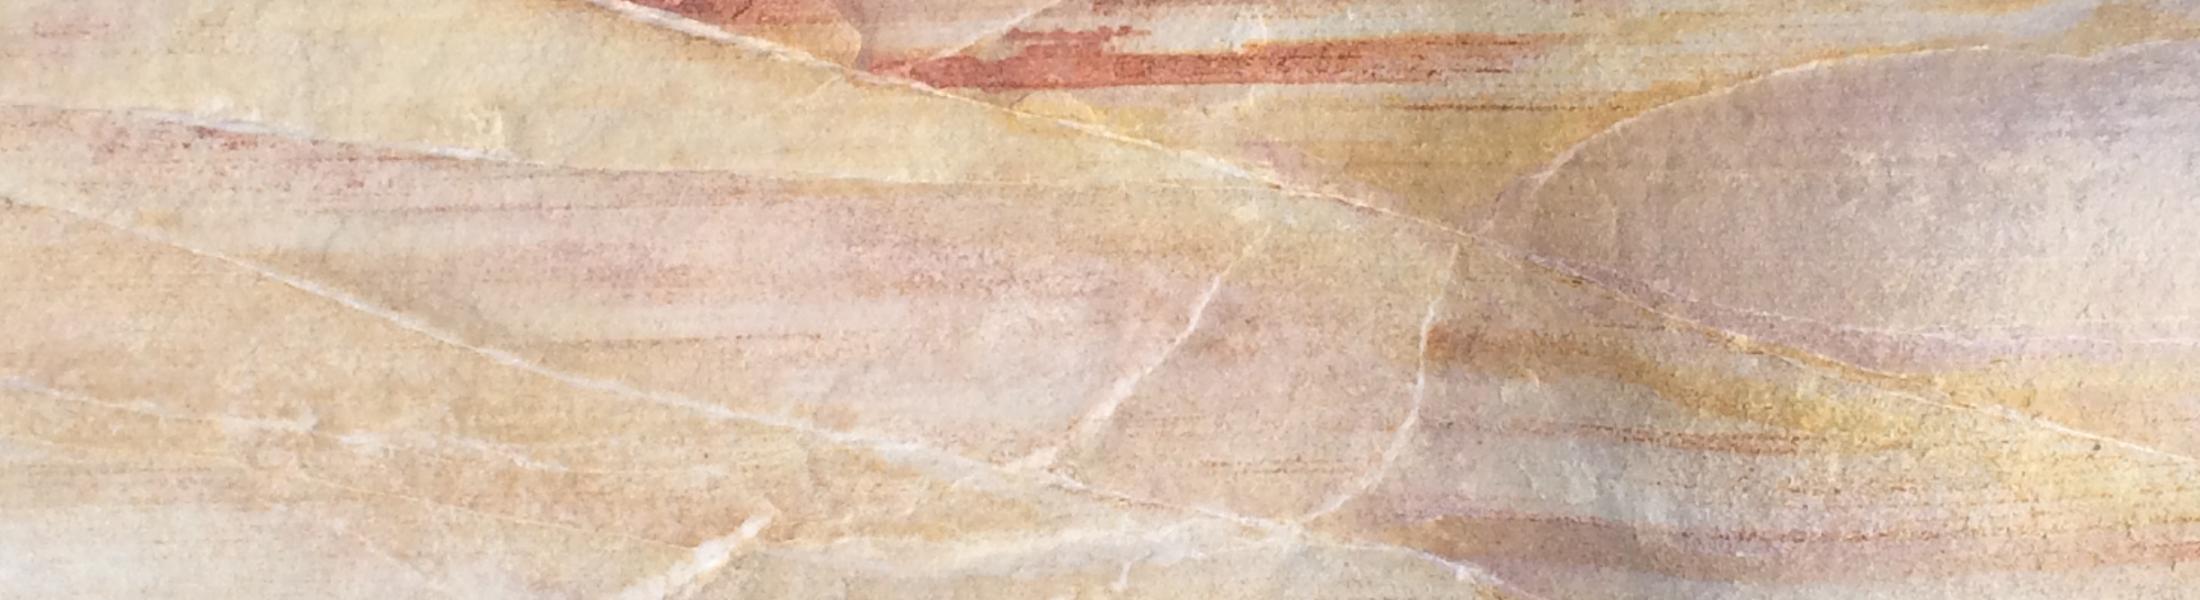 closeup of sandstone surface